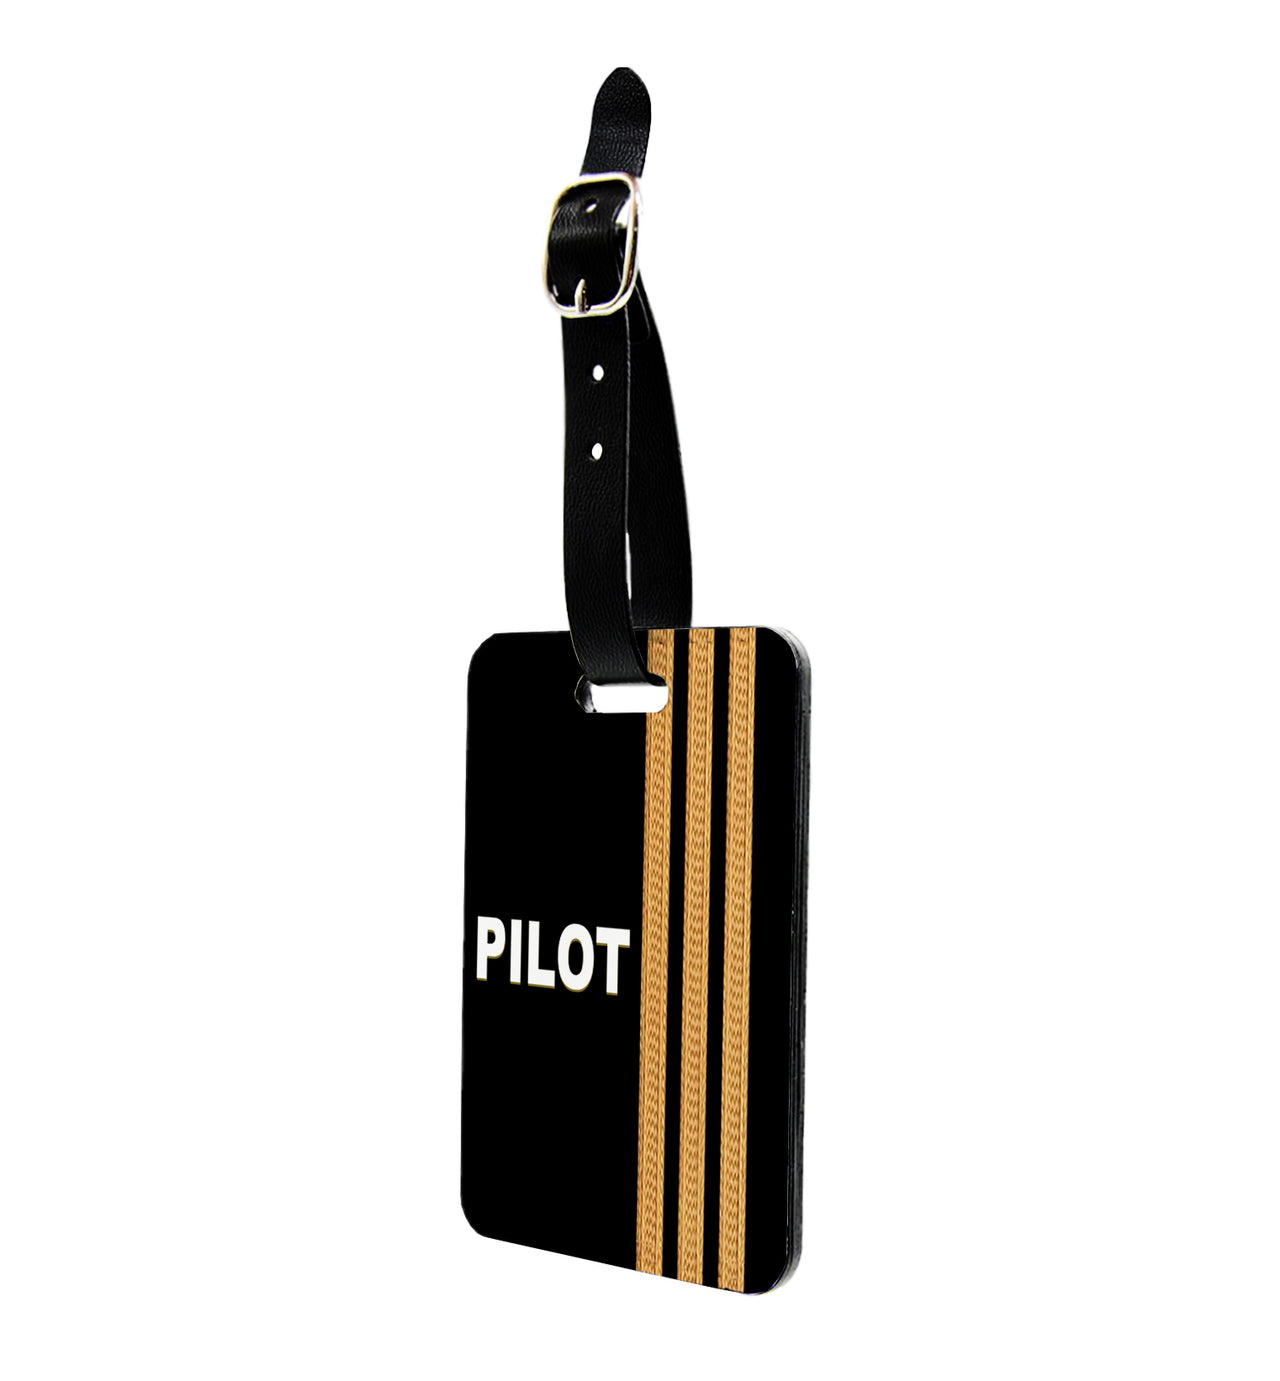 PILOT & Pilot Epaulettes (4,3,2 Lines) Designed Luggage Tag